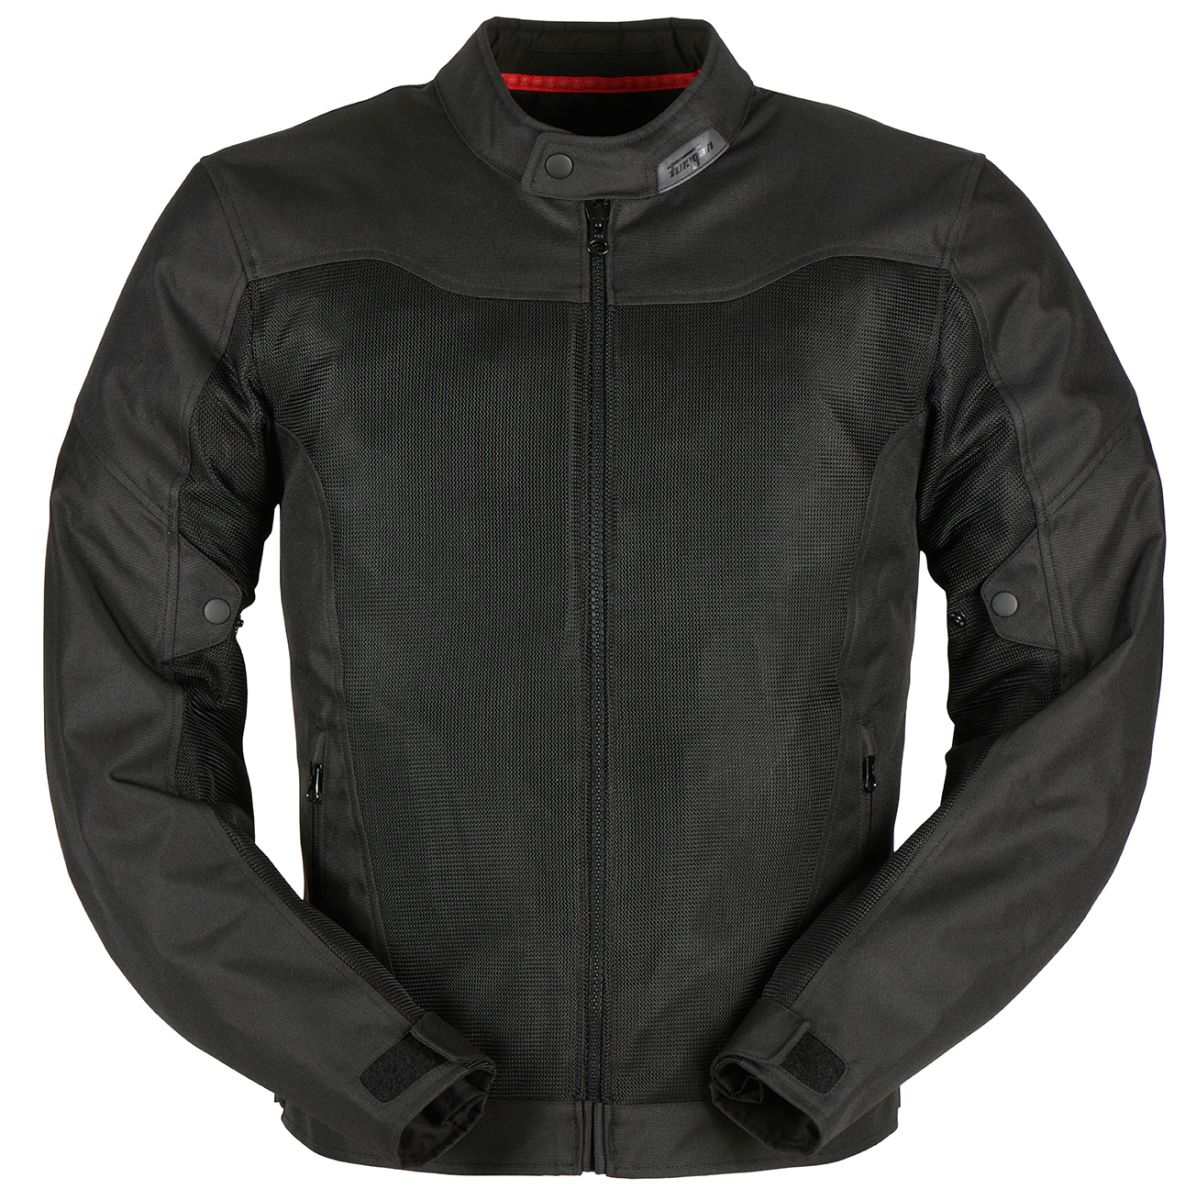 Image of Furygan Mistral 3 Evo Jacket Black Size XL ID 3435980342043